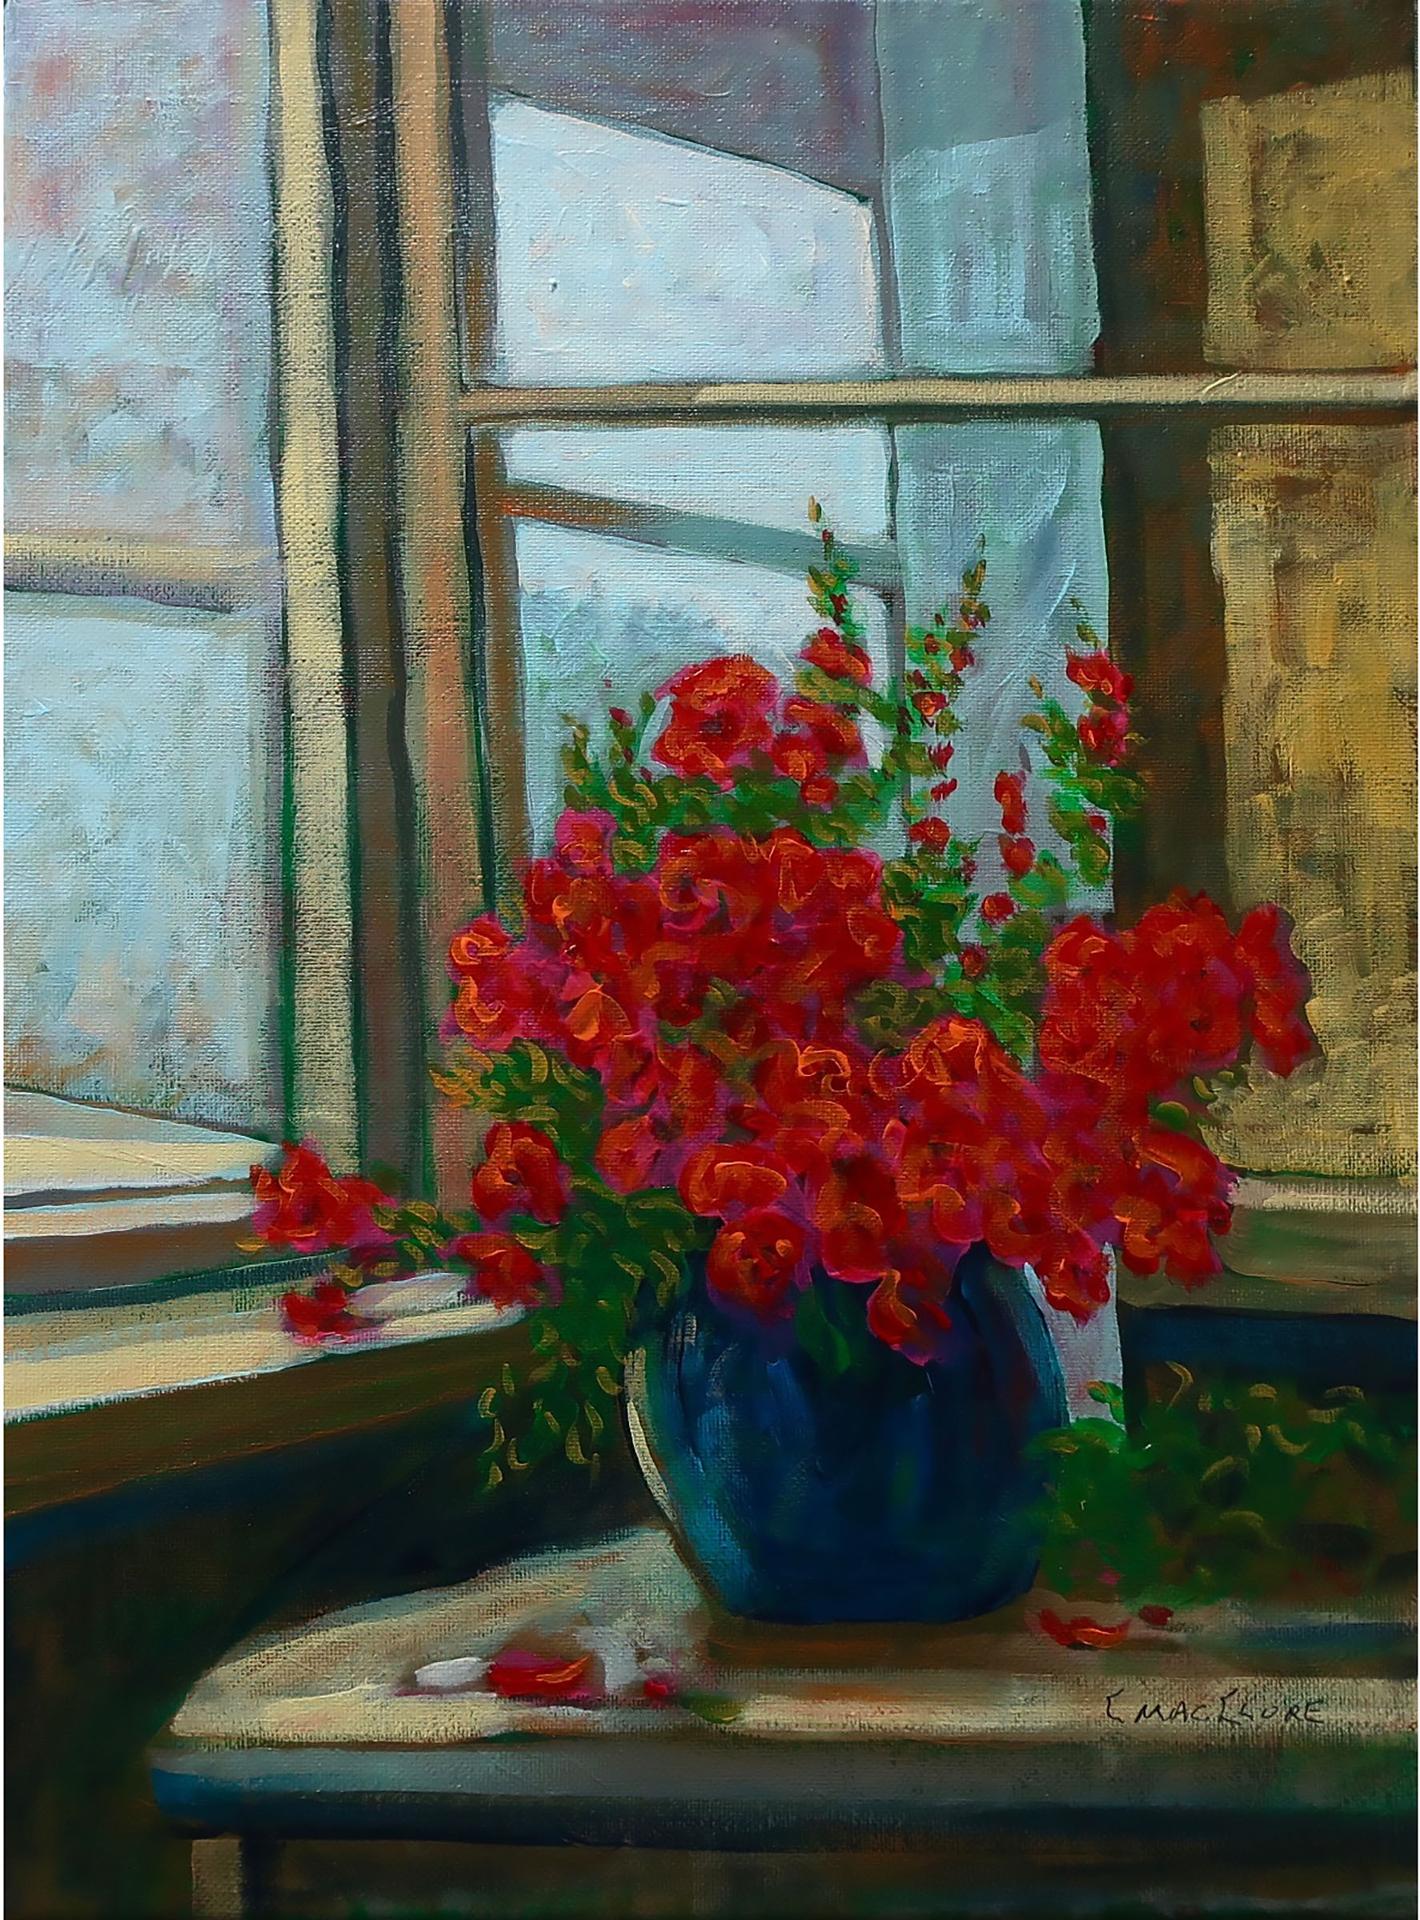 Chris MacClure (1943) - Morning Window